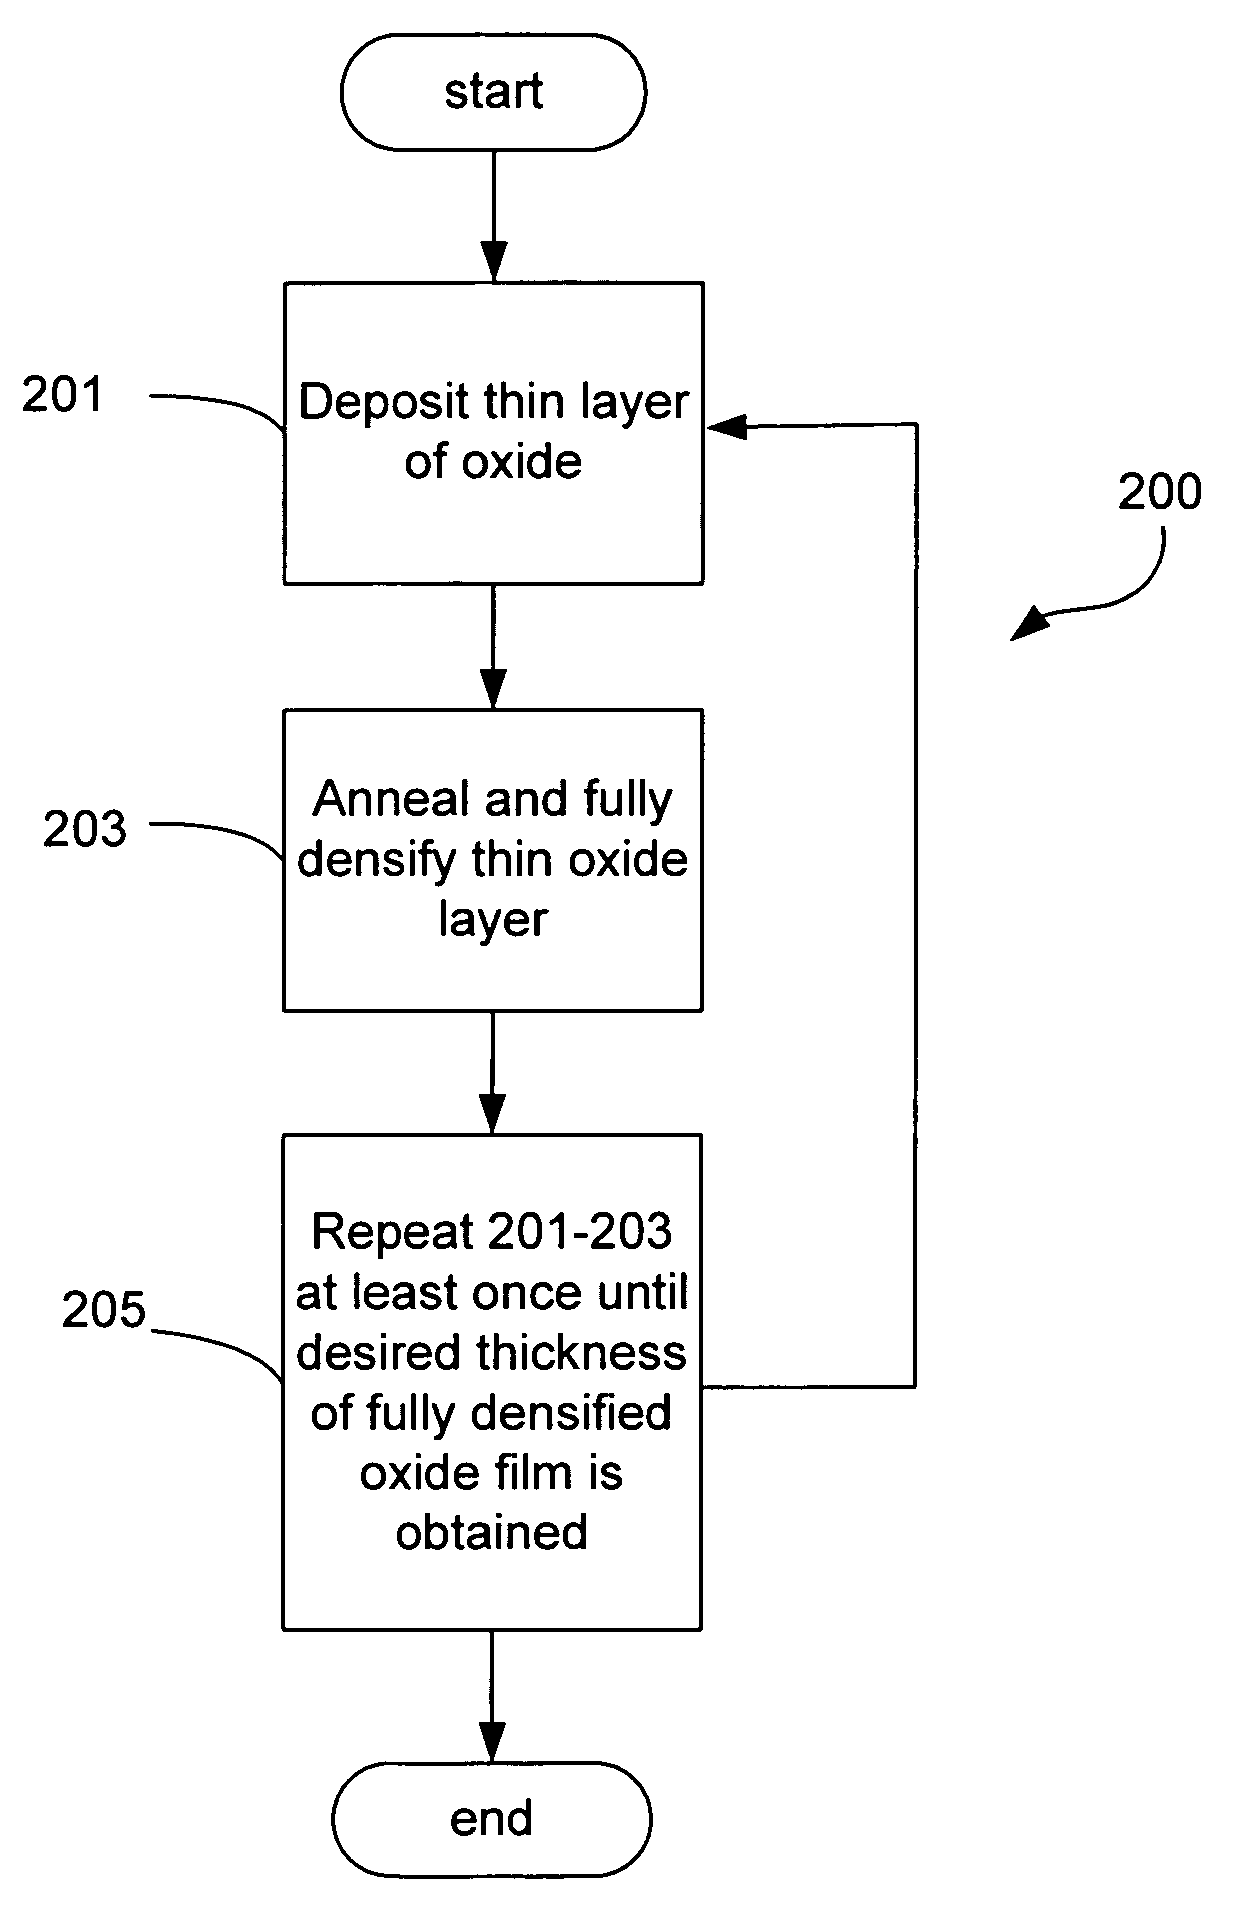 Sequential deposition/anneal film densification method